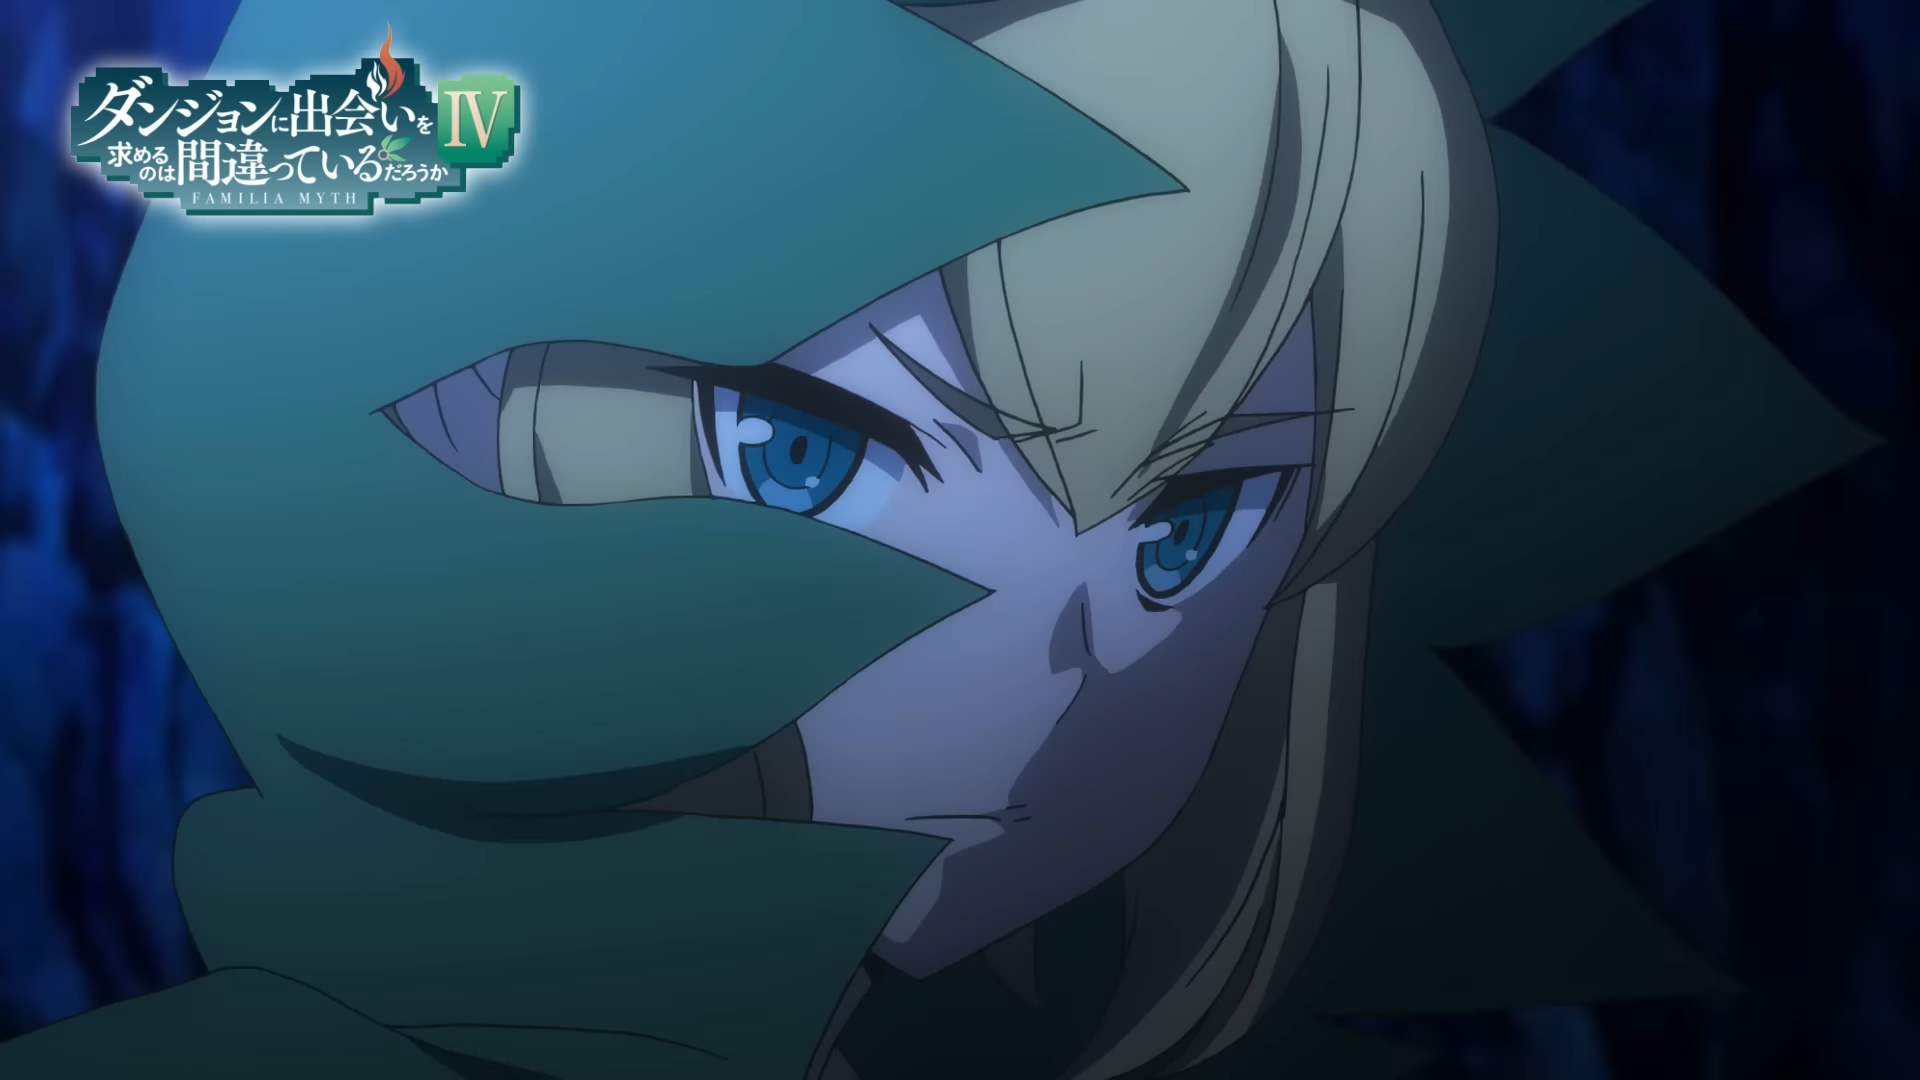 Possible Spoilers) Danmachi Episode 8 preview : r/anime